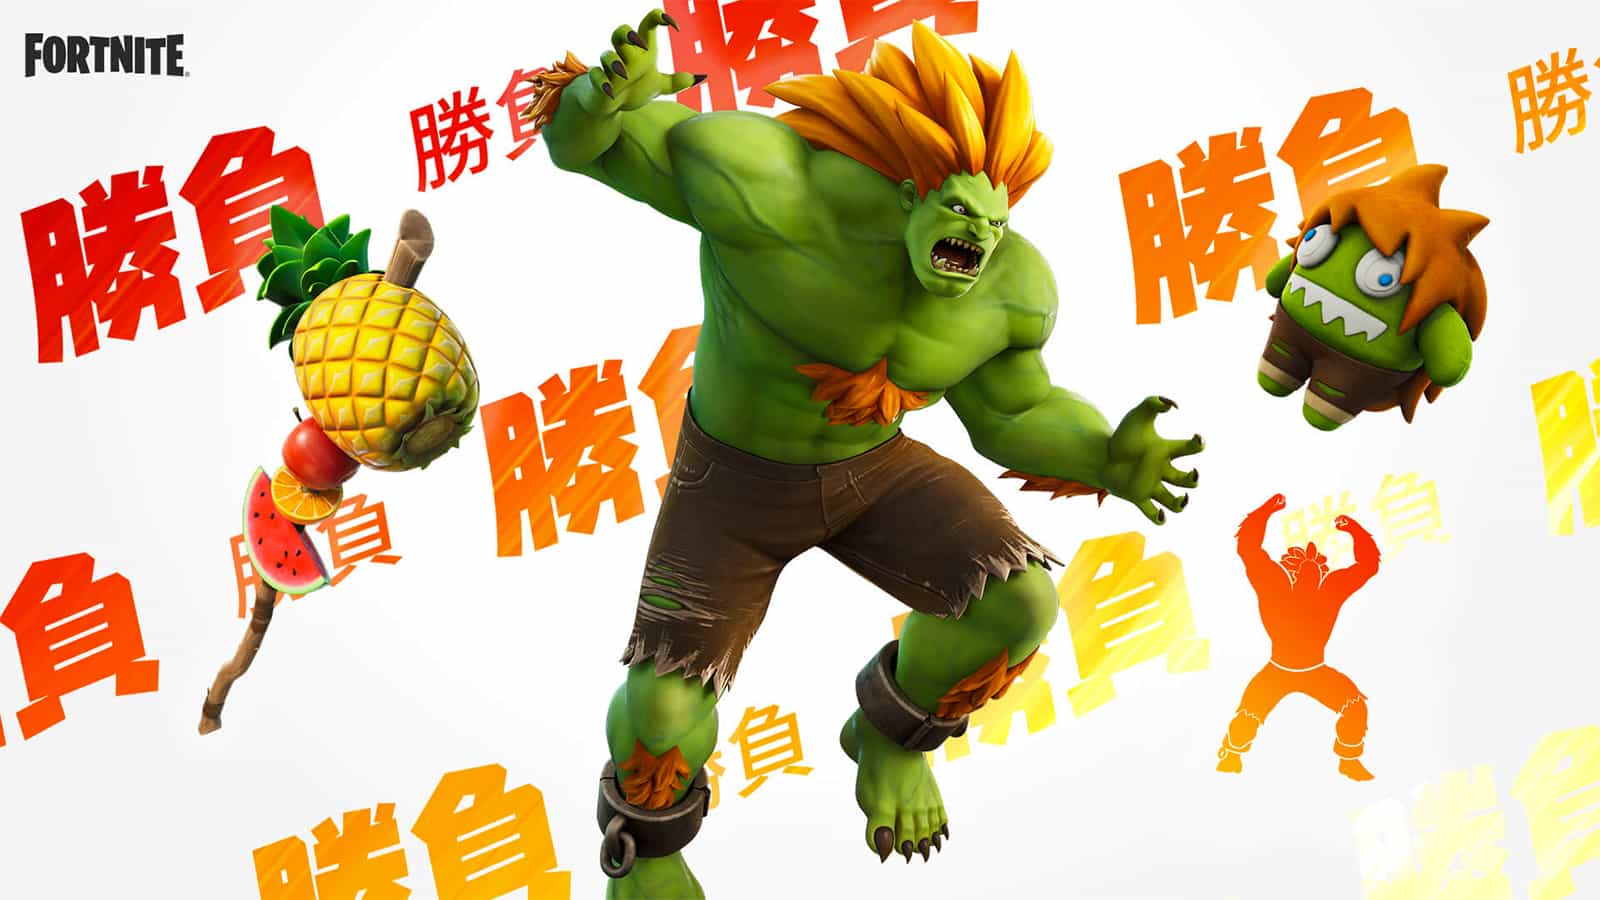 Blanka bringing electrifying fighting style to Street Fighter V